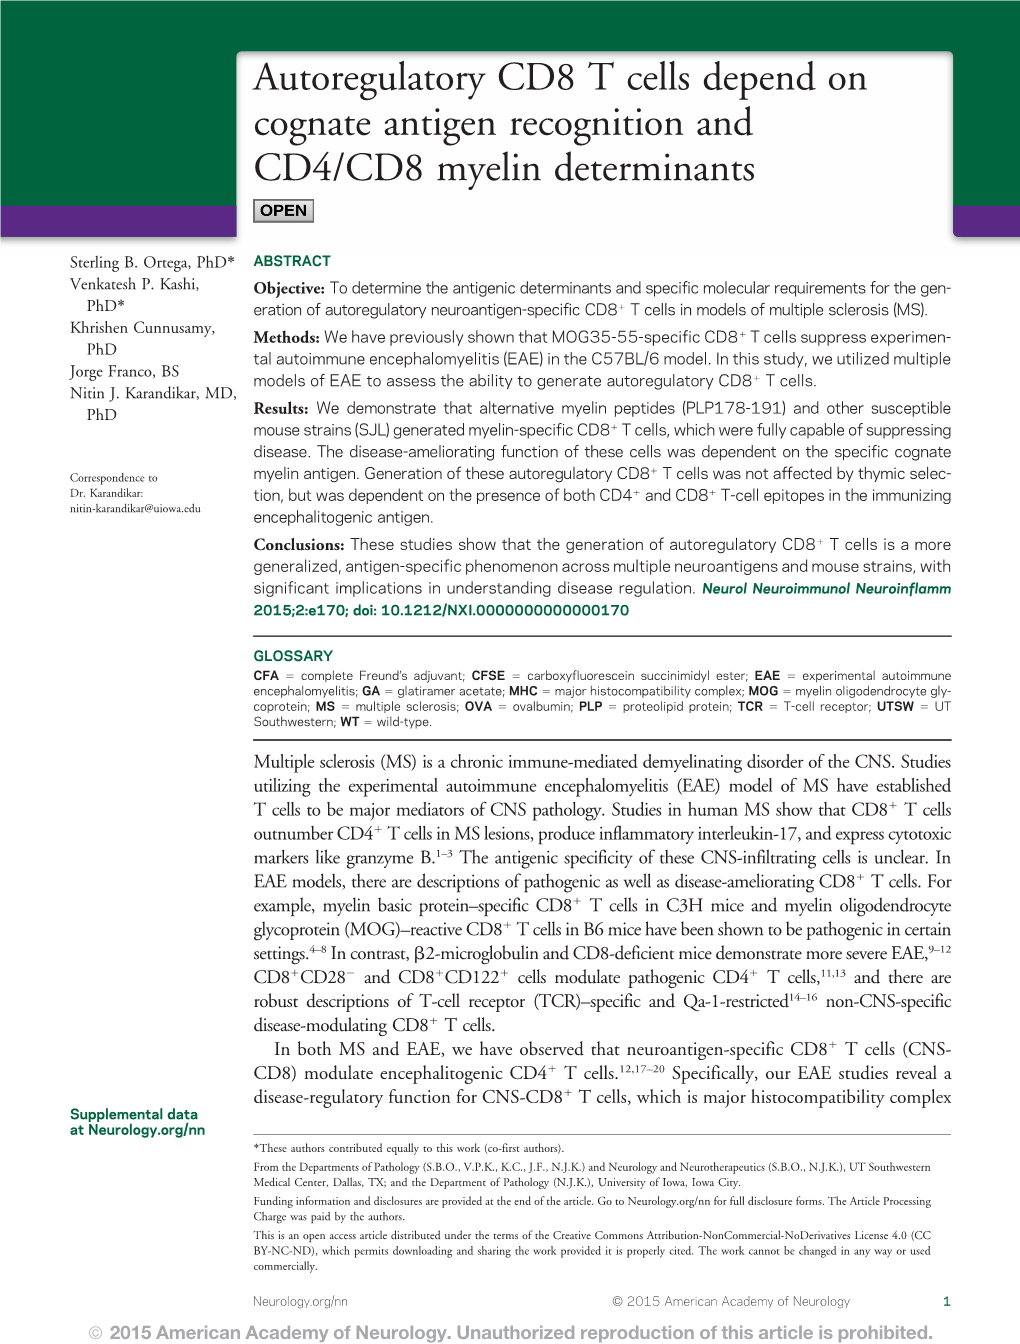 Autoregulatory CD8 T Cells Depend on Cognate Antigen Recognition and CD4/CD8 Myelin Determinants